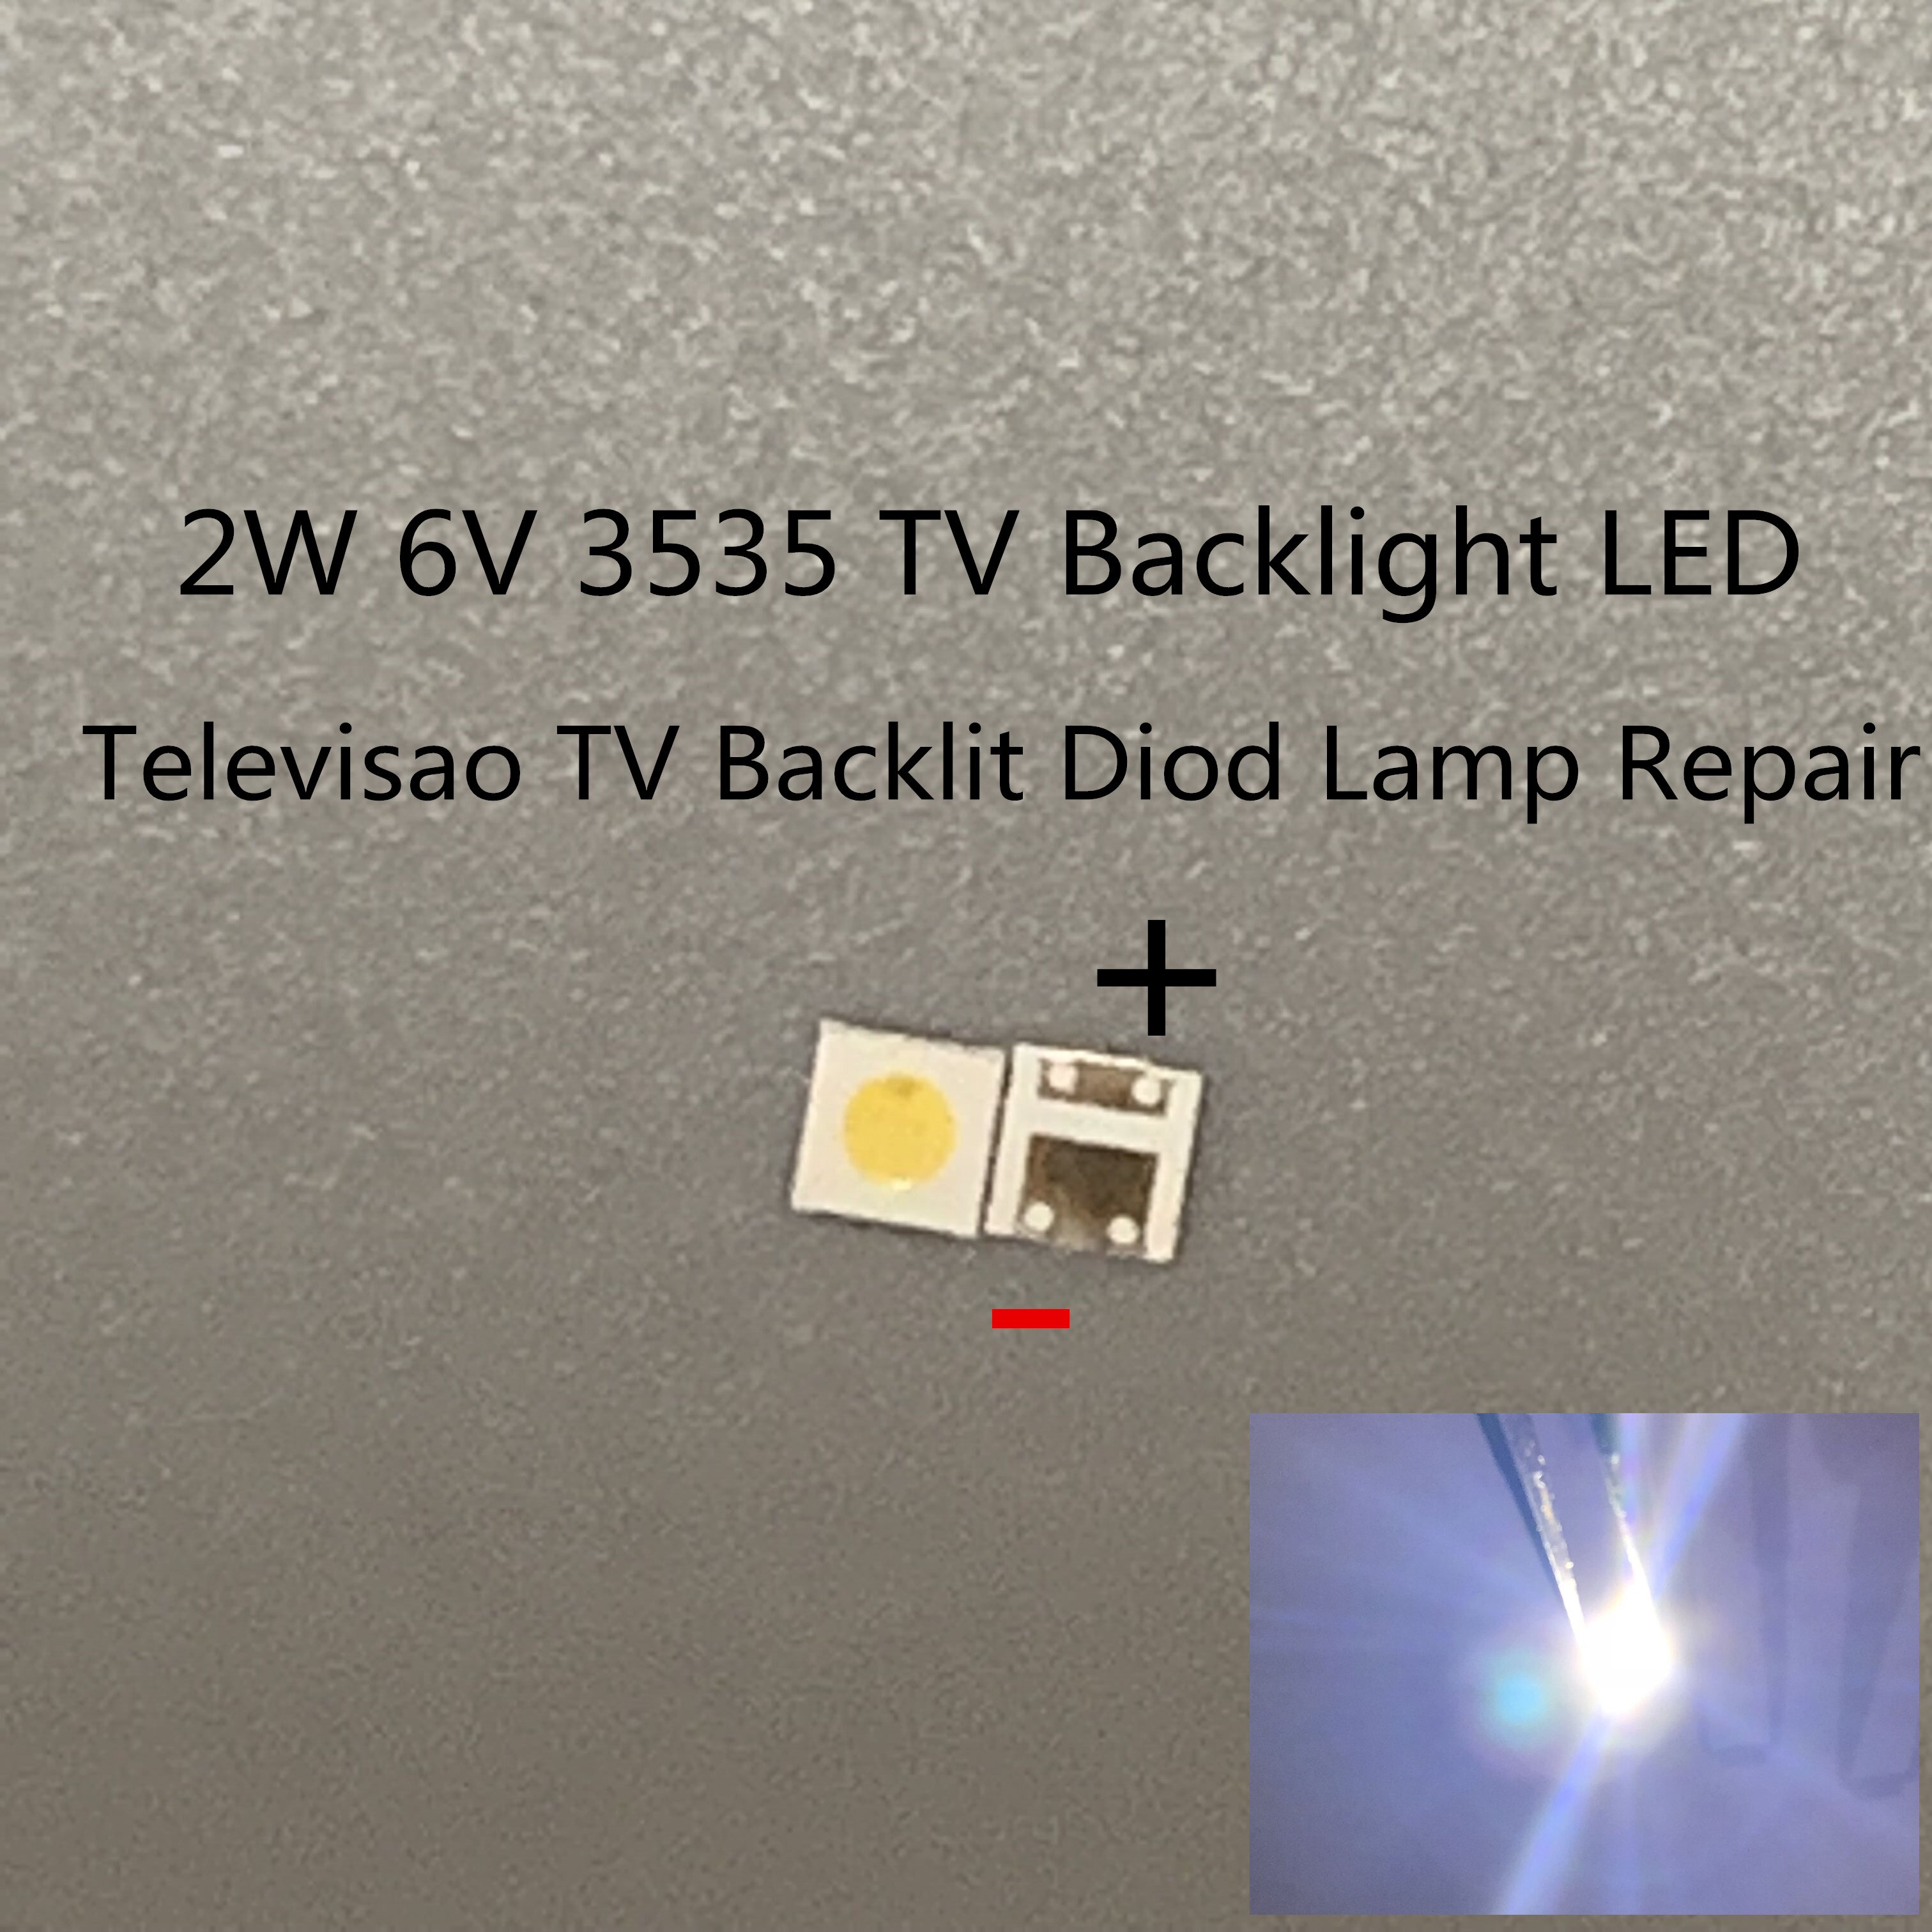 100 Stuks 2W 6V 3V 3535 Tv Backlight Led Smd Diodes Koel Wit Lcd Tv Backlight Televisao backlit Diod Lamp Reparatie Toepassing Lg